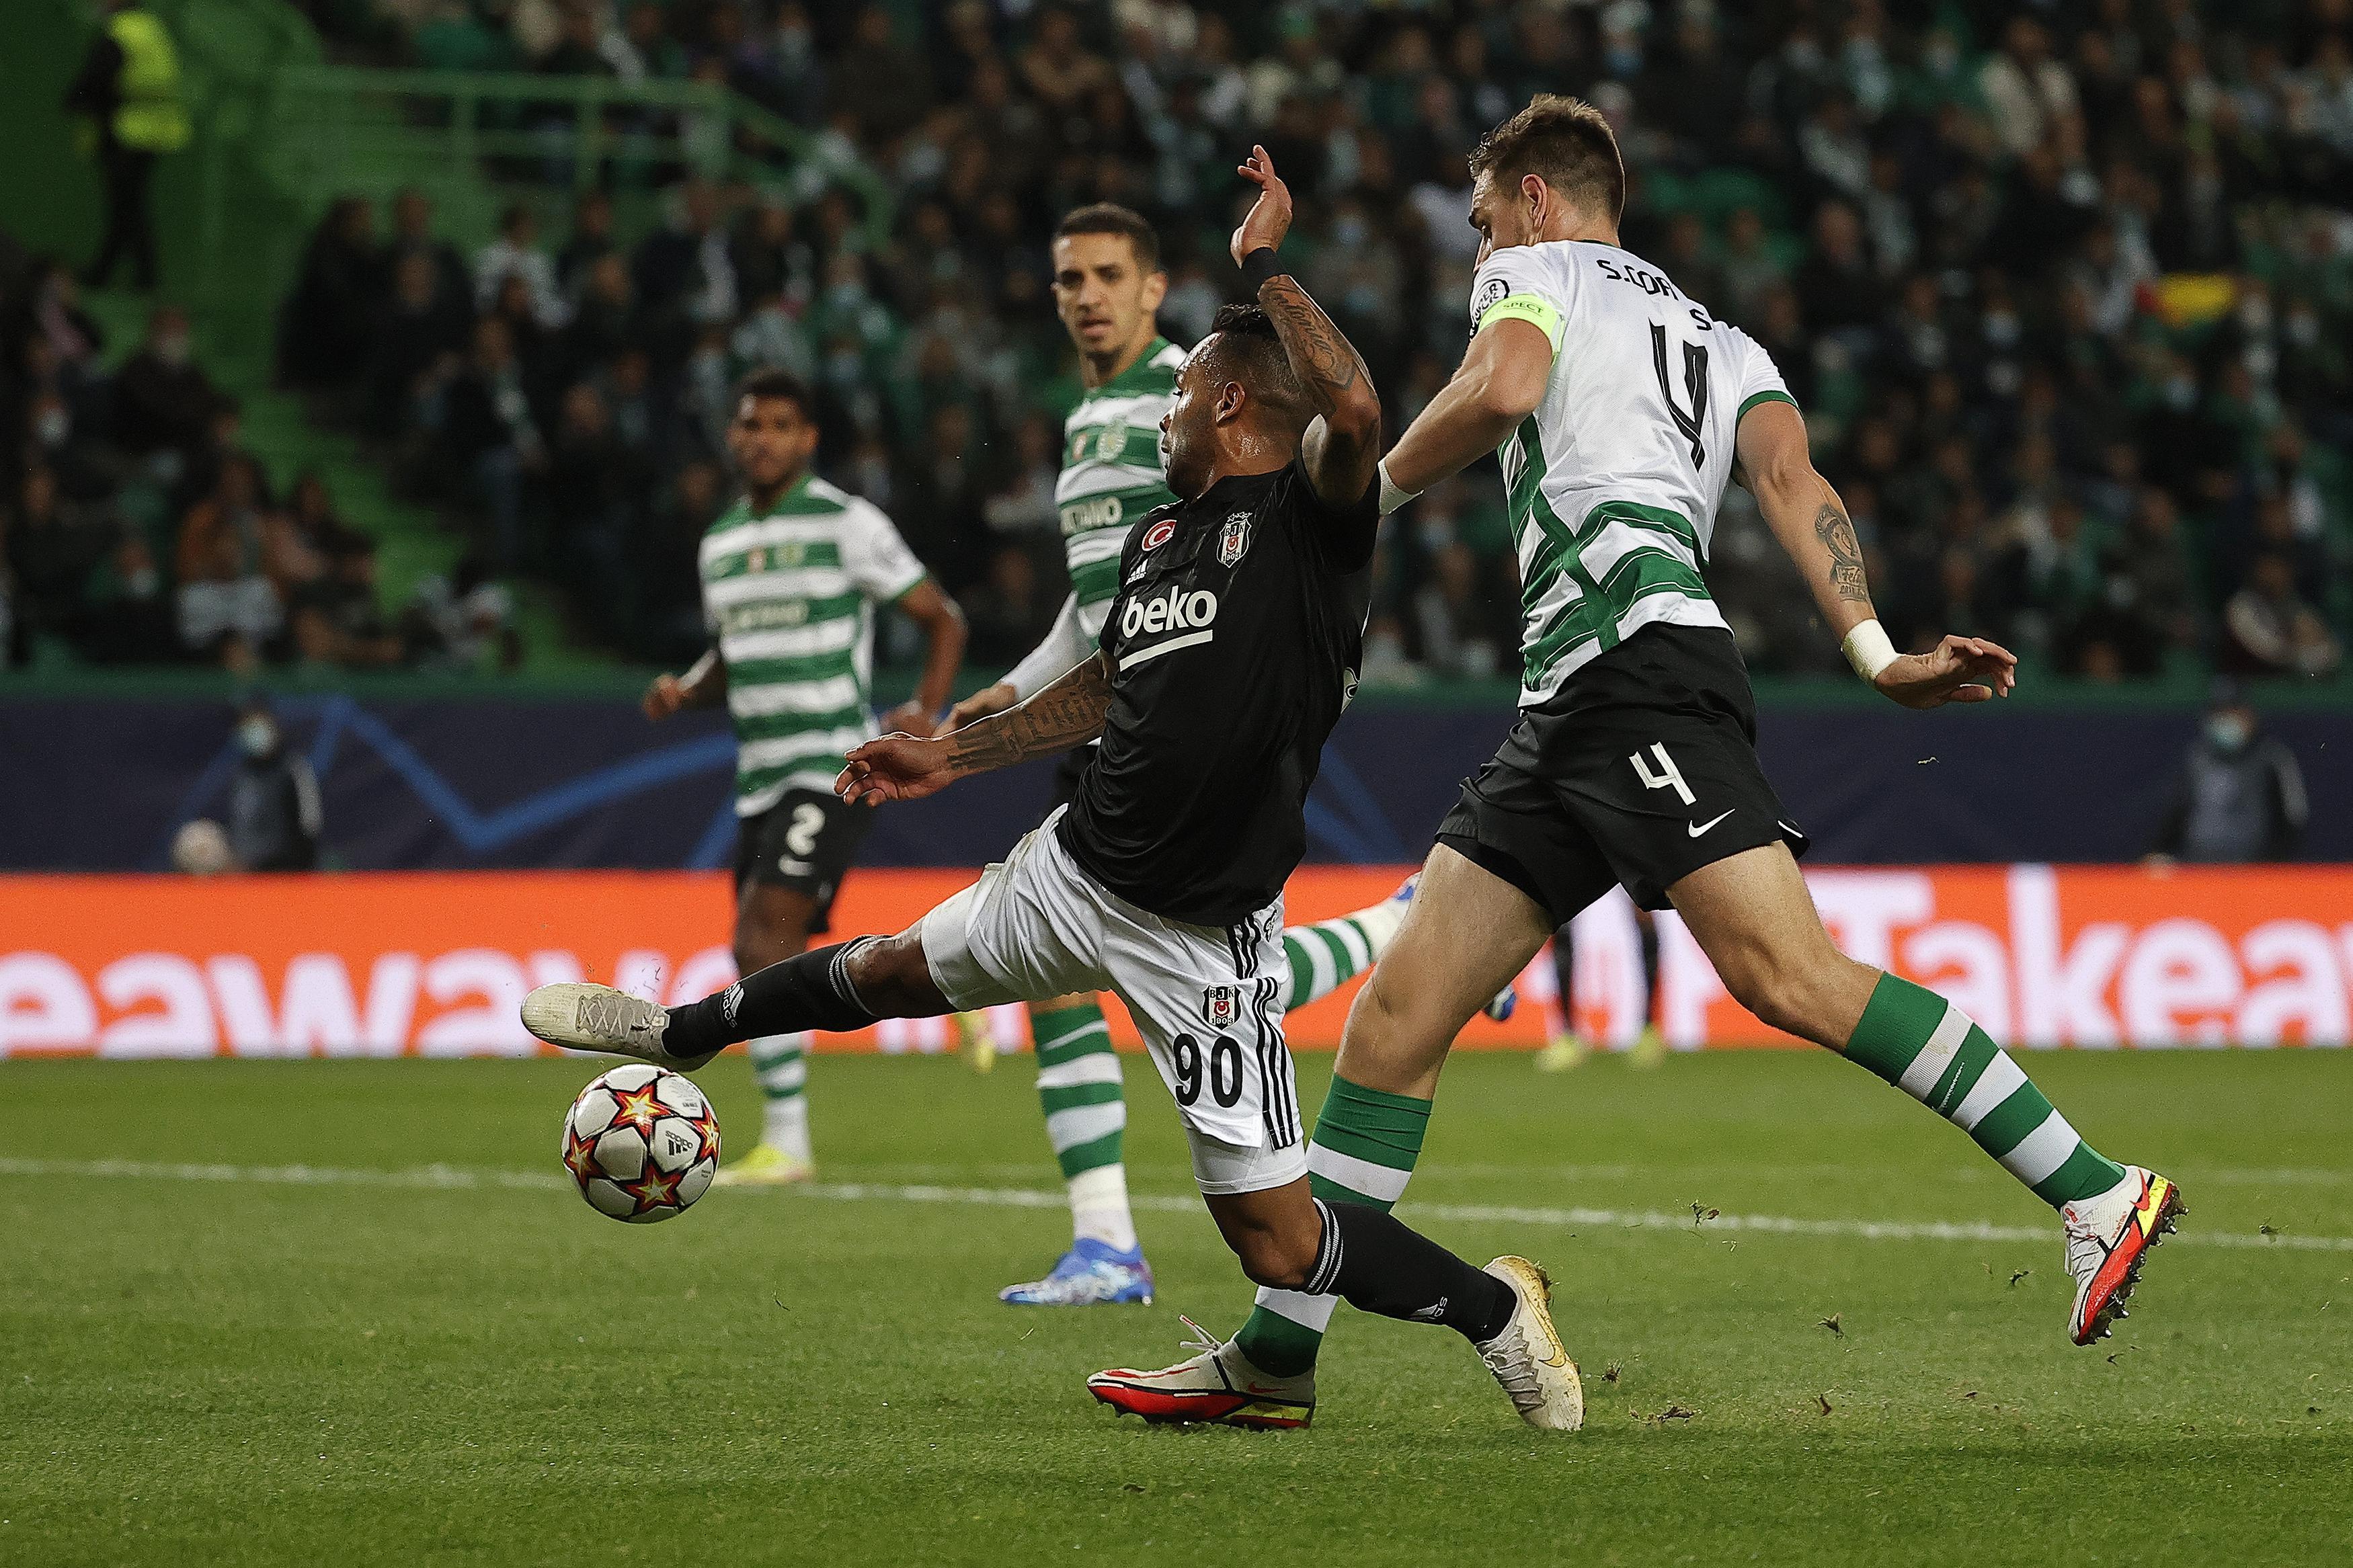 (ÖZET) Sporting Lizbon-Beşiktaş maç sonucu: 4-0